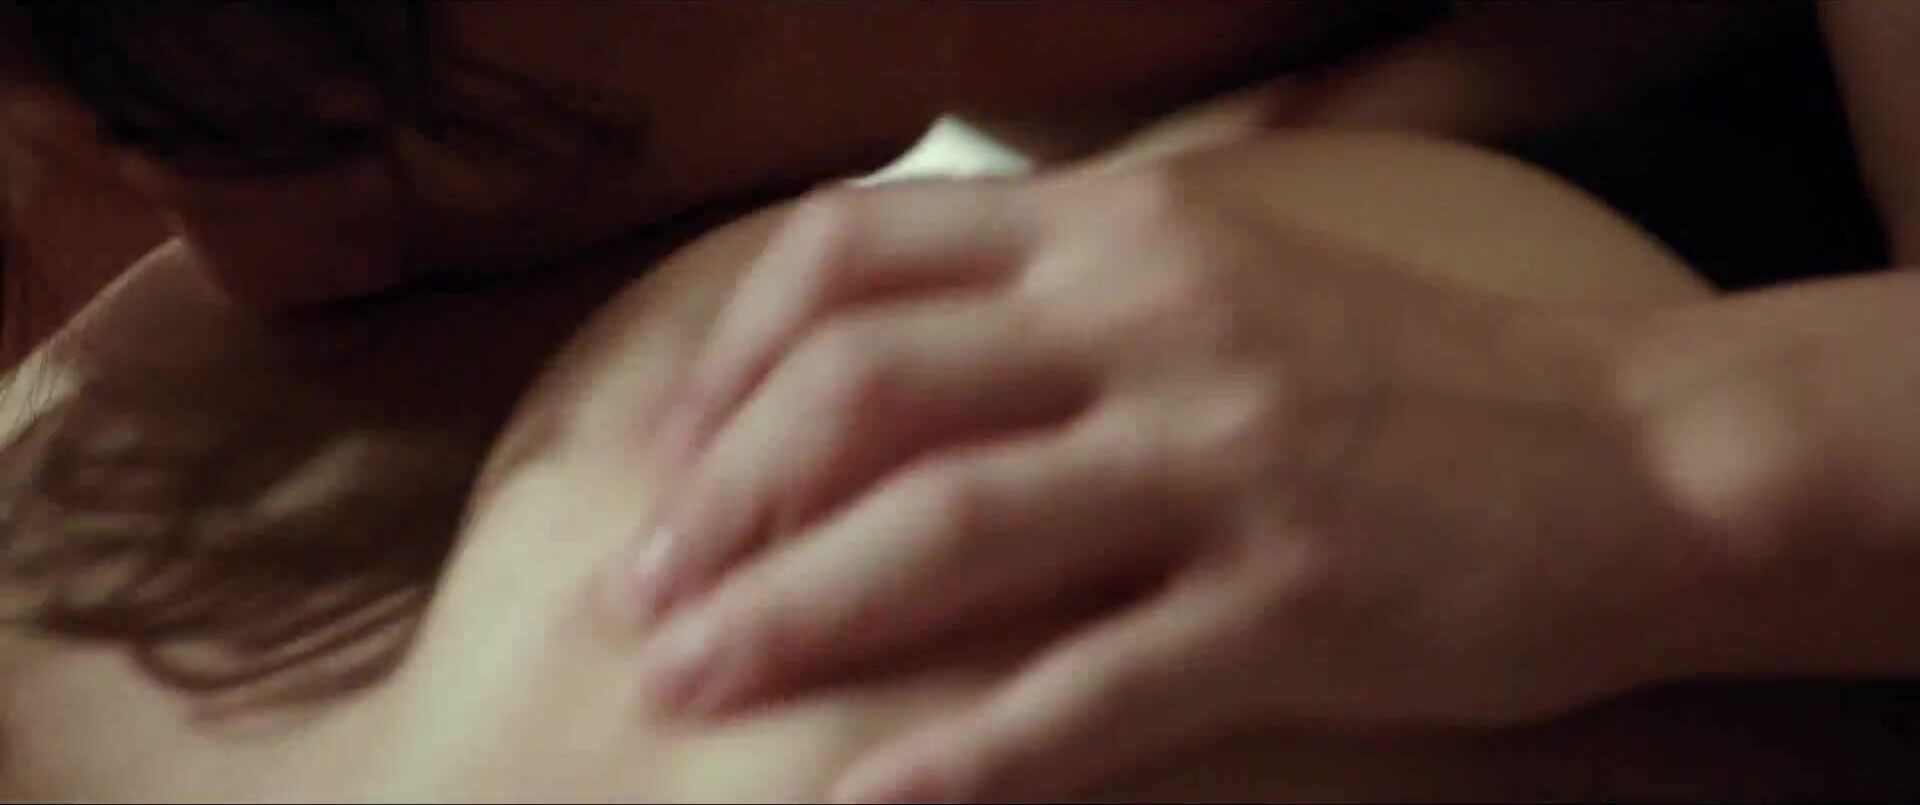 Viet Petite Asian girl with tiny boobs has sex with man in explicit scene from Korean film Jeune Mec